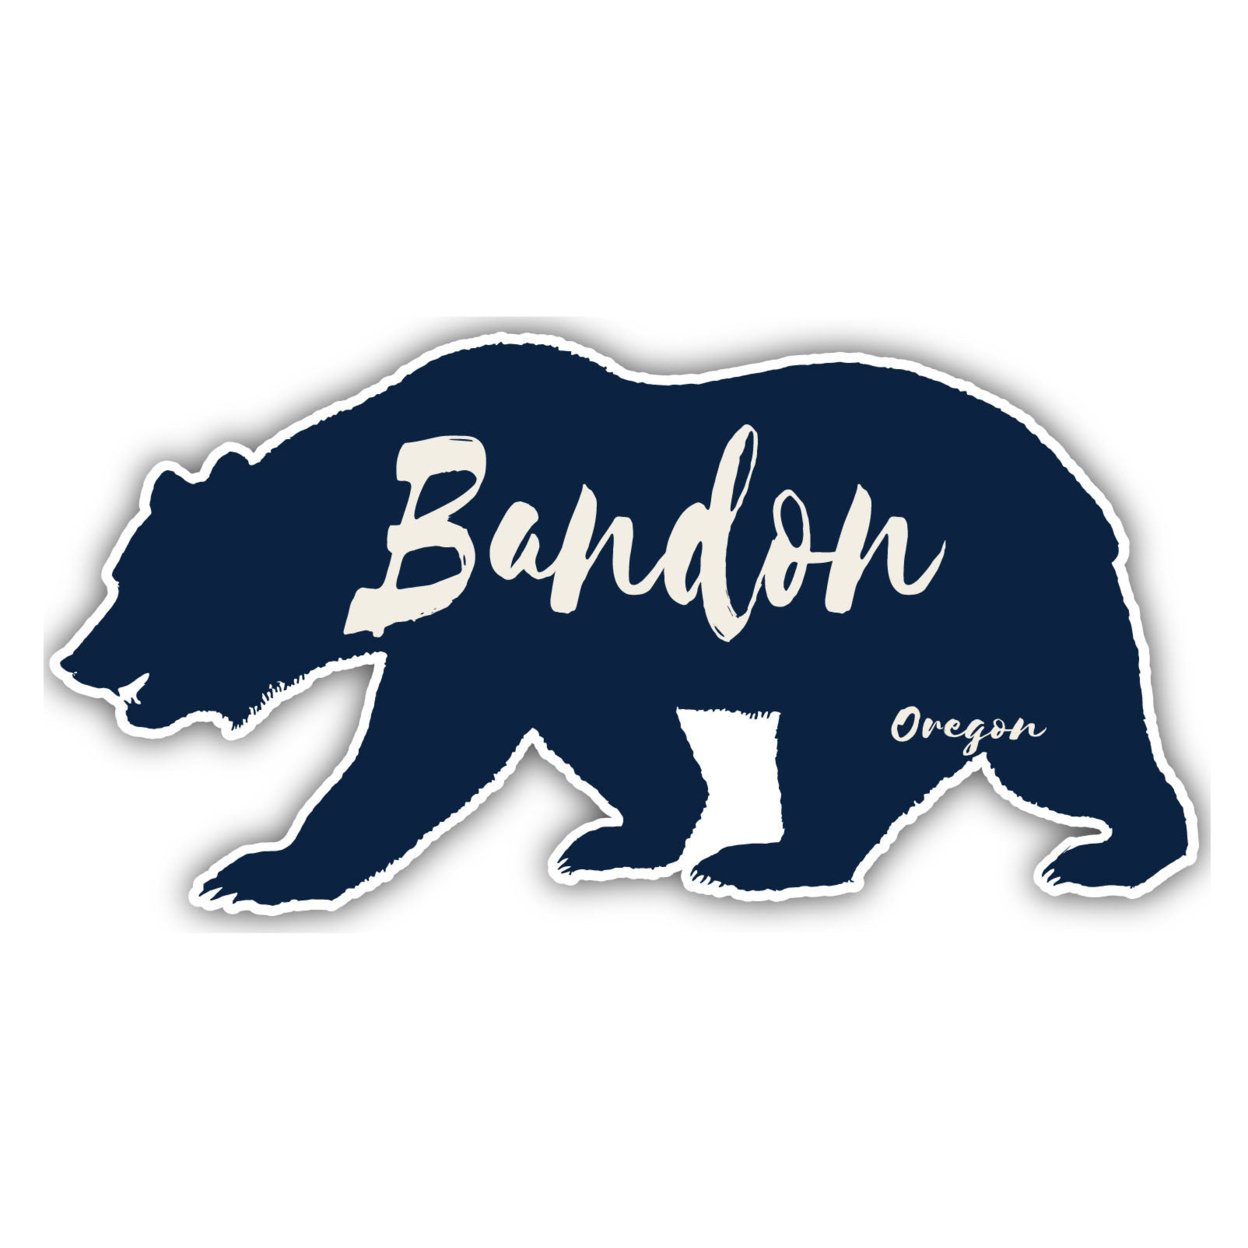 Bandon Oregon Souvenir Decorative Stickers (Choose Theme And Size) - 4-Pack, 12-Inch, Camp Life